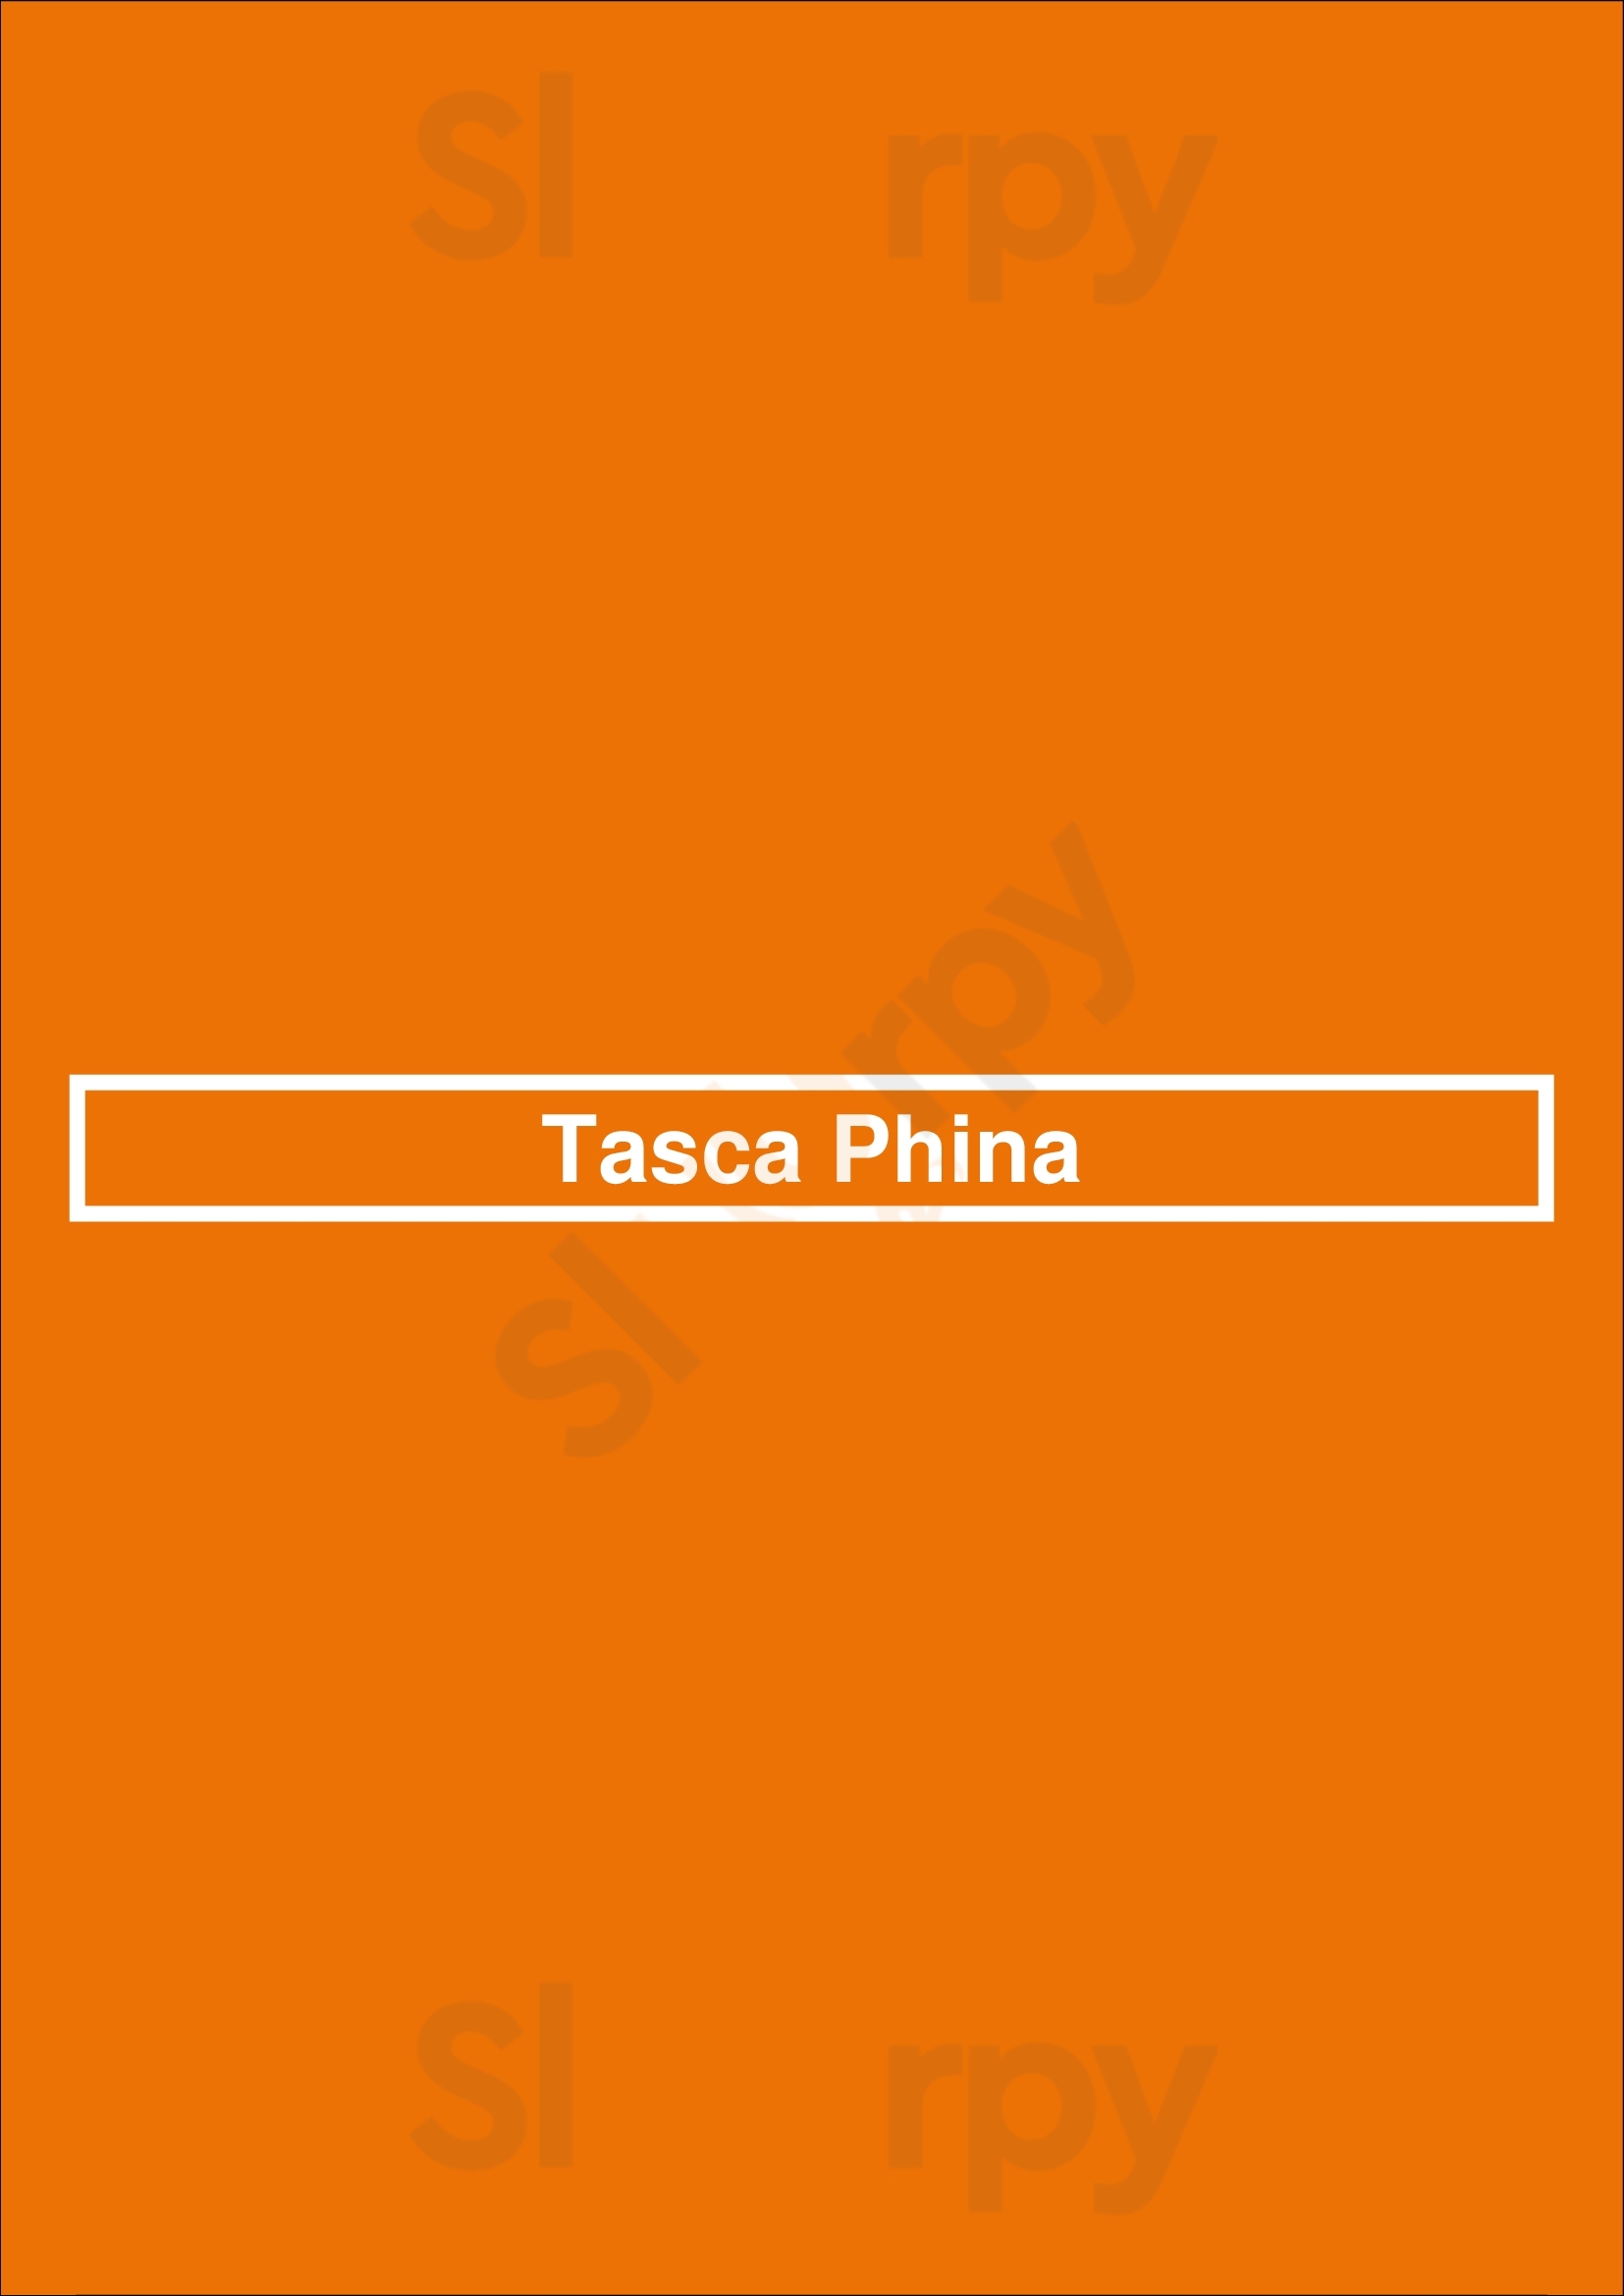 Tasca Phina Lisboa Menu - 1